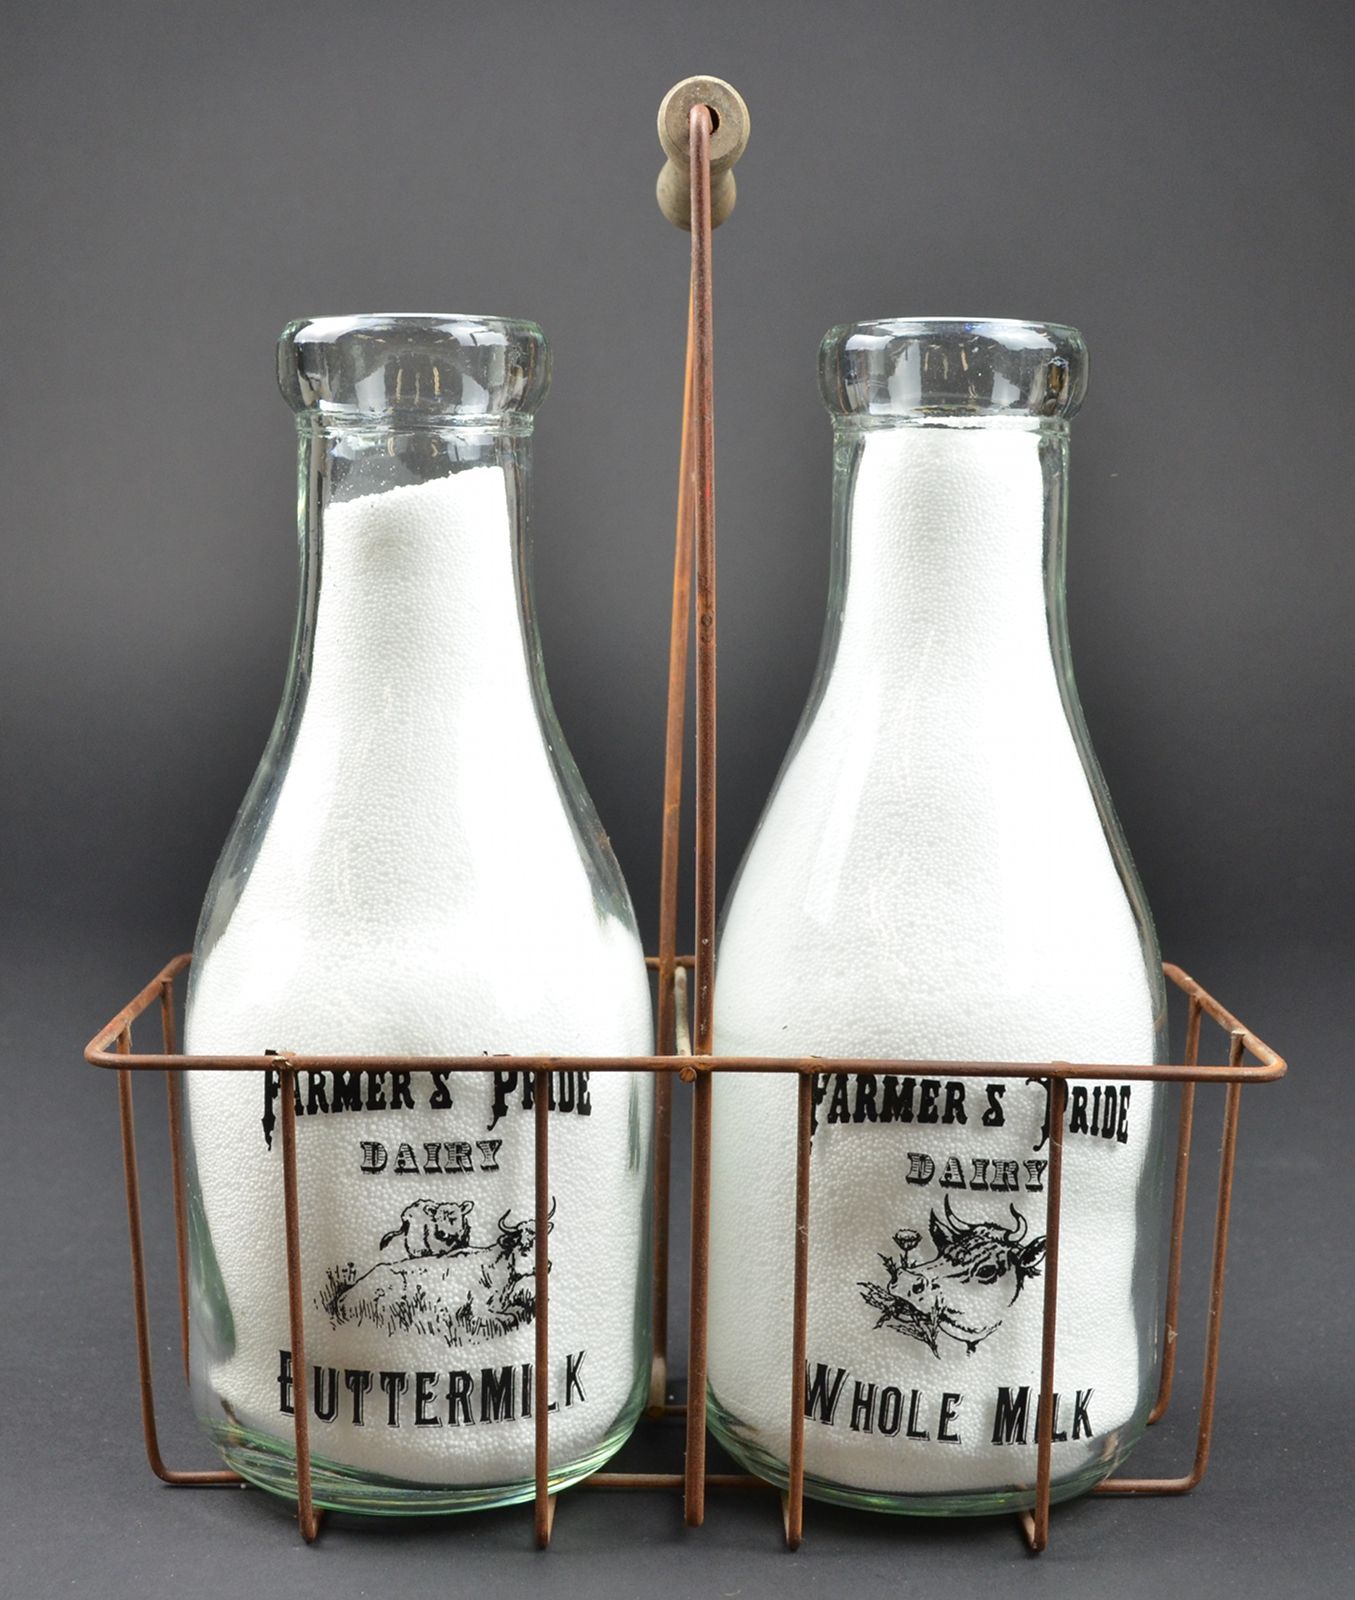 Farmers Pride Dairy Buttermilk & Whole Milk 2 Quart Bottles Basket